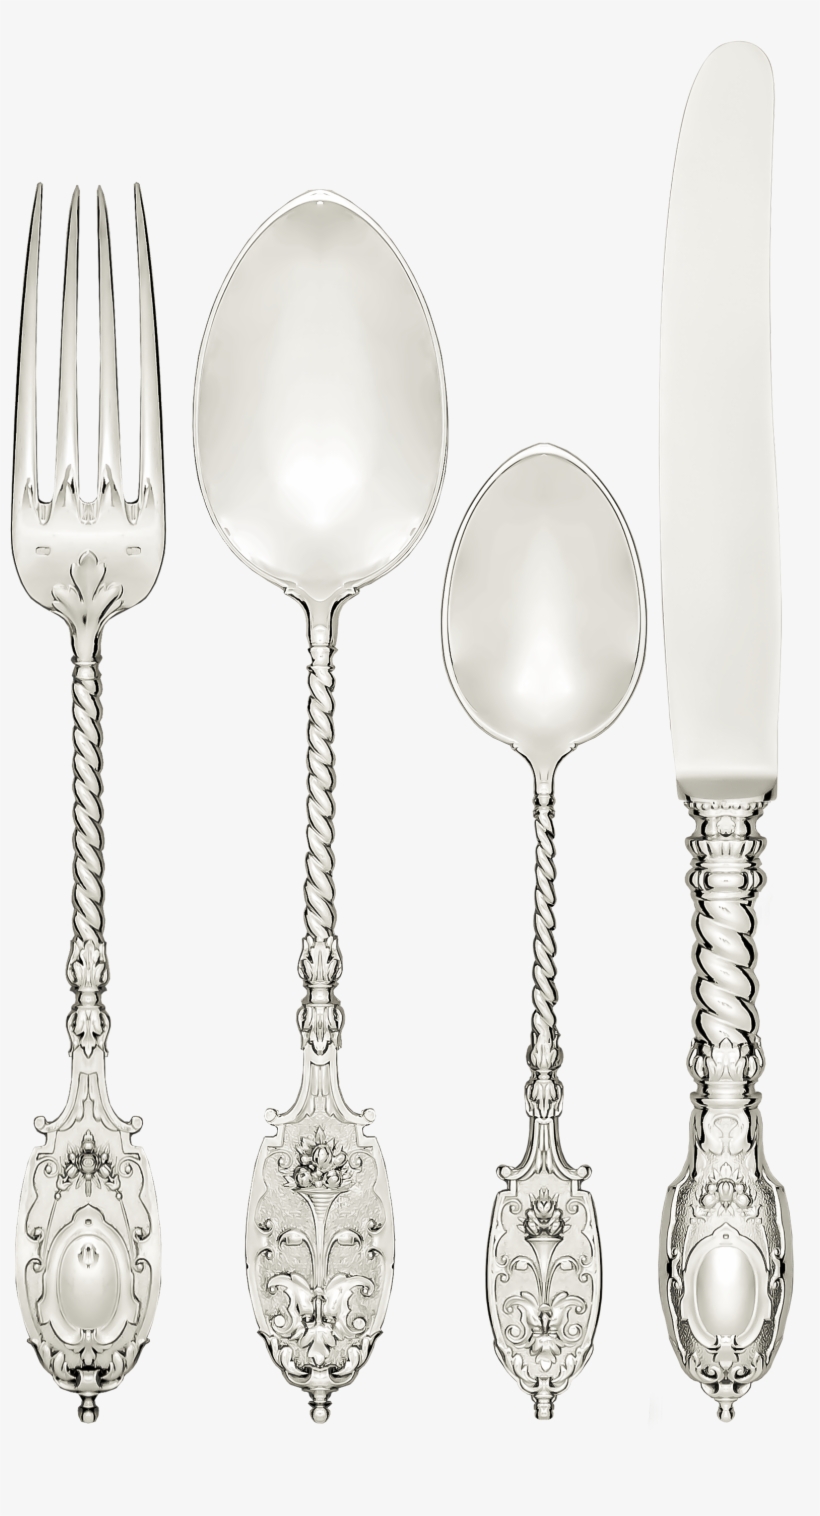 Jarosinski & Vaugoin Hand Forged Silver Cutlery Design - Silver, transparent png #8985022